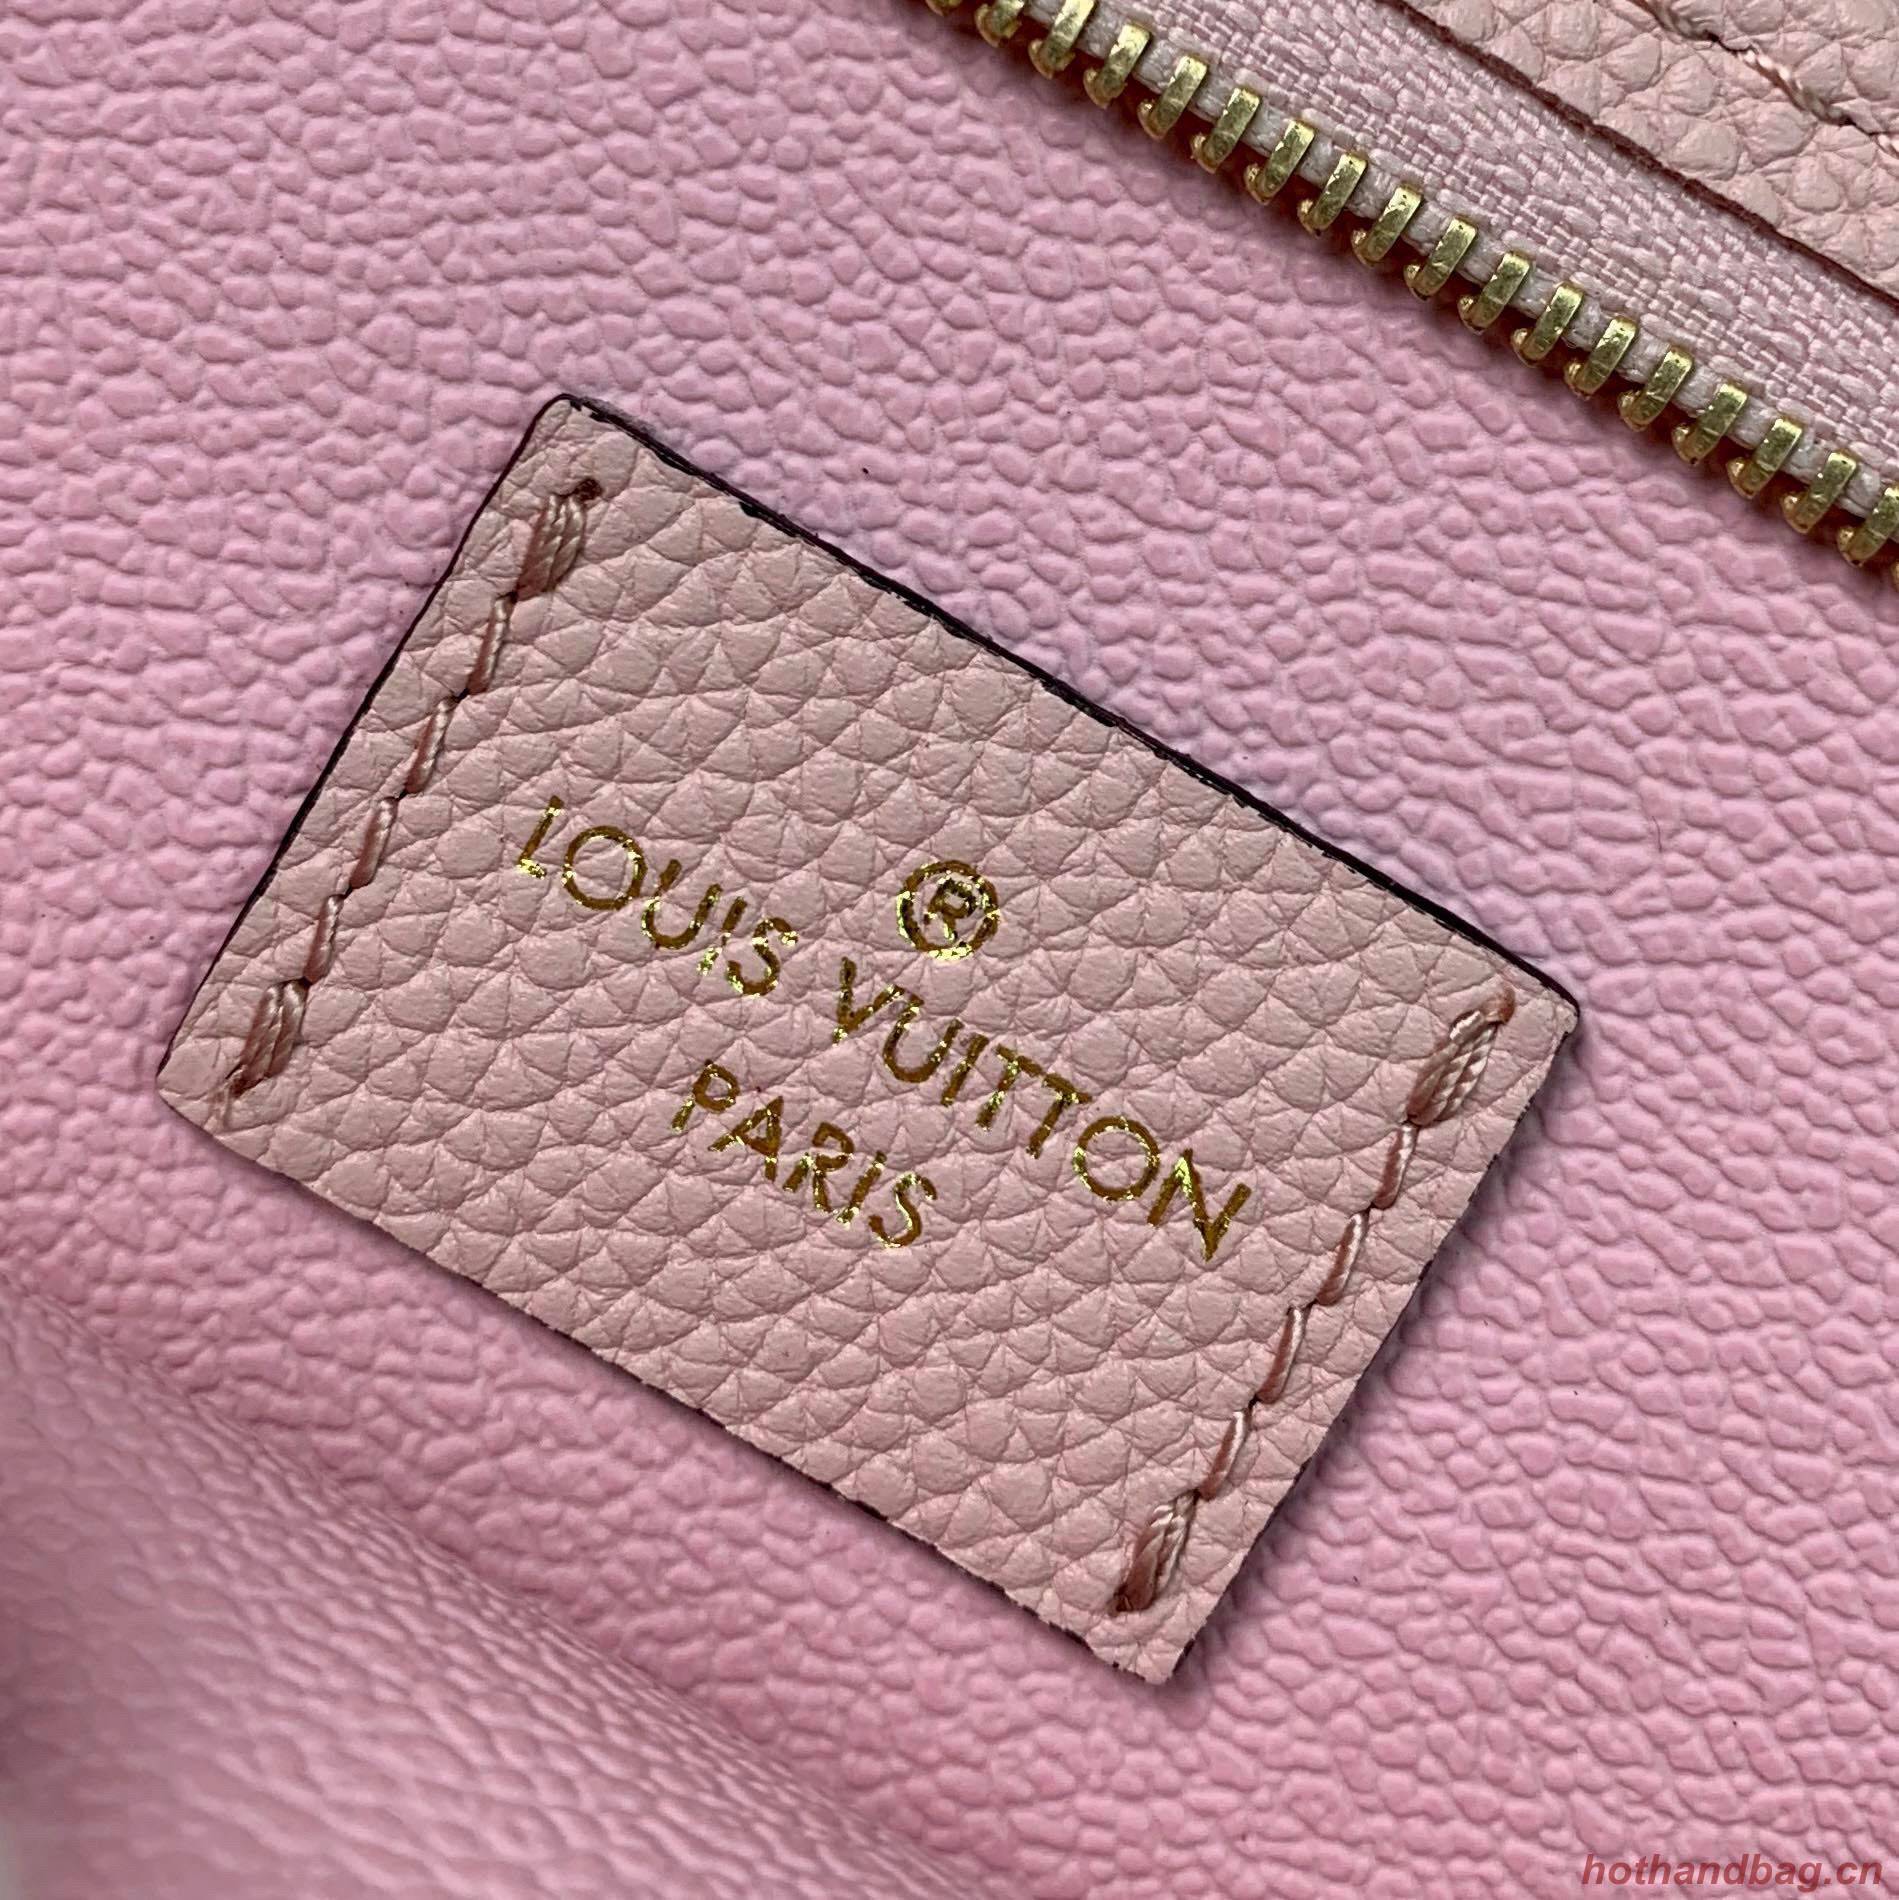 Louis Vuitton POCHETTE VOYAGE MM M80504 Pink & Saffron